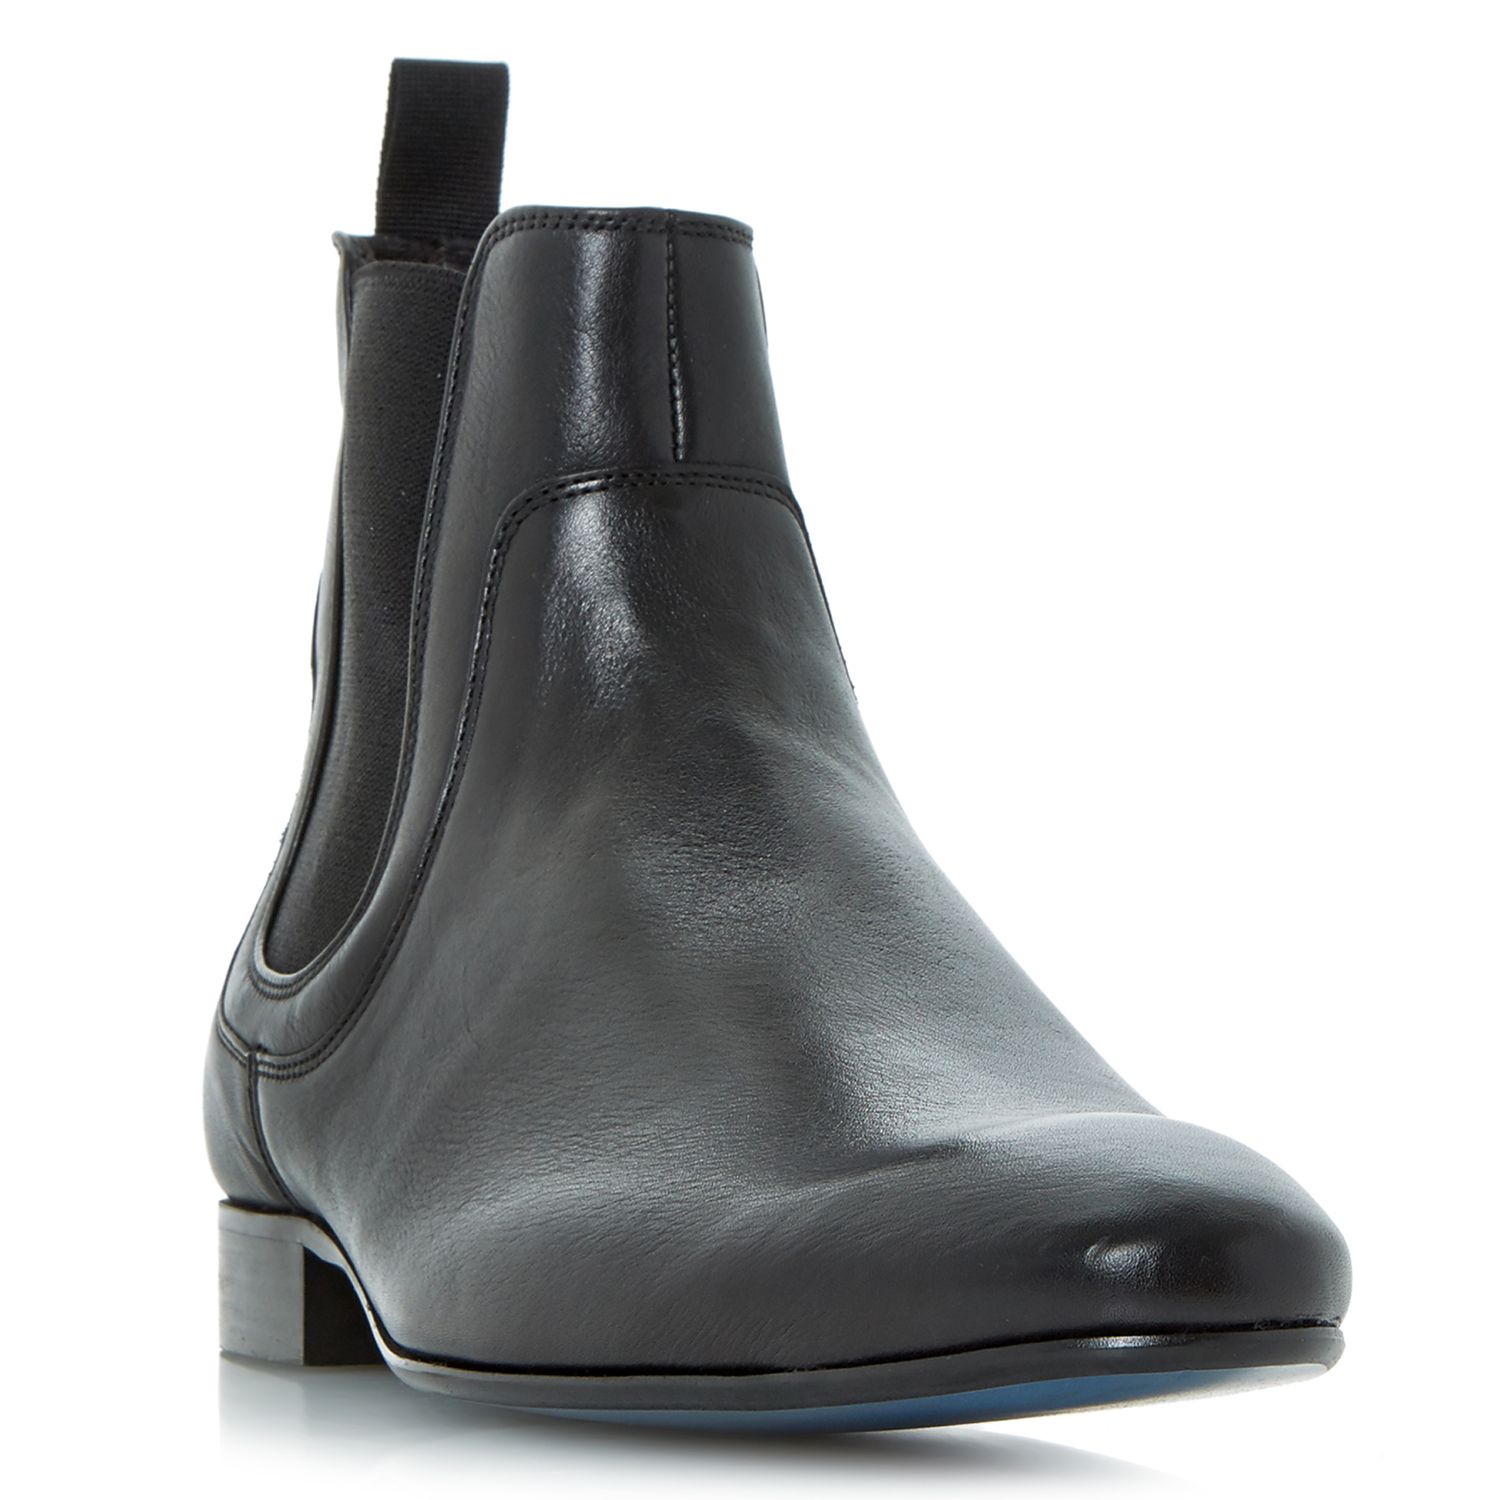 Bertie Maple Leather Chelsea Boots, Black, 7